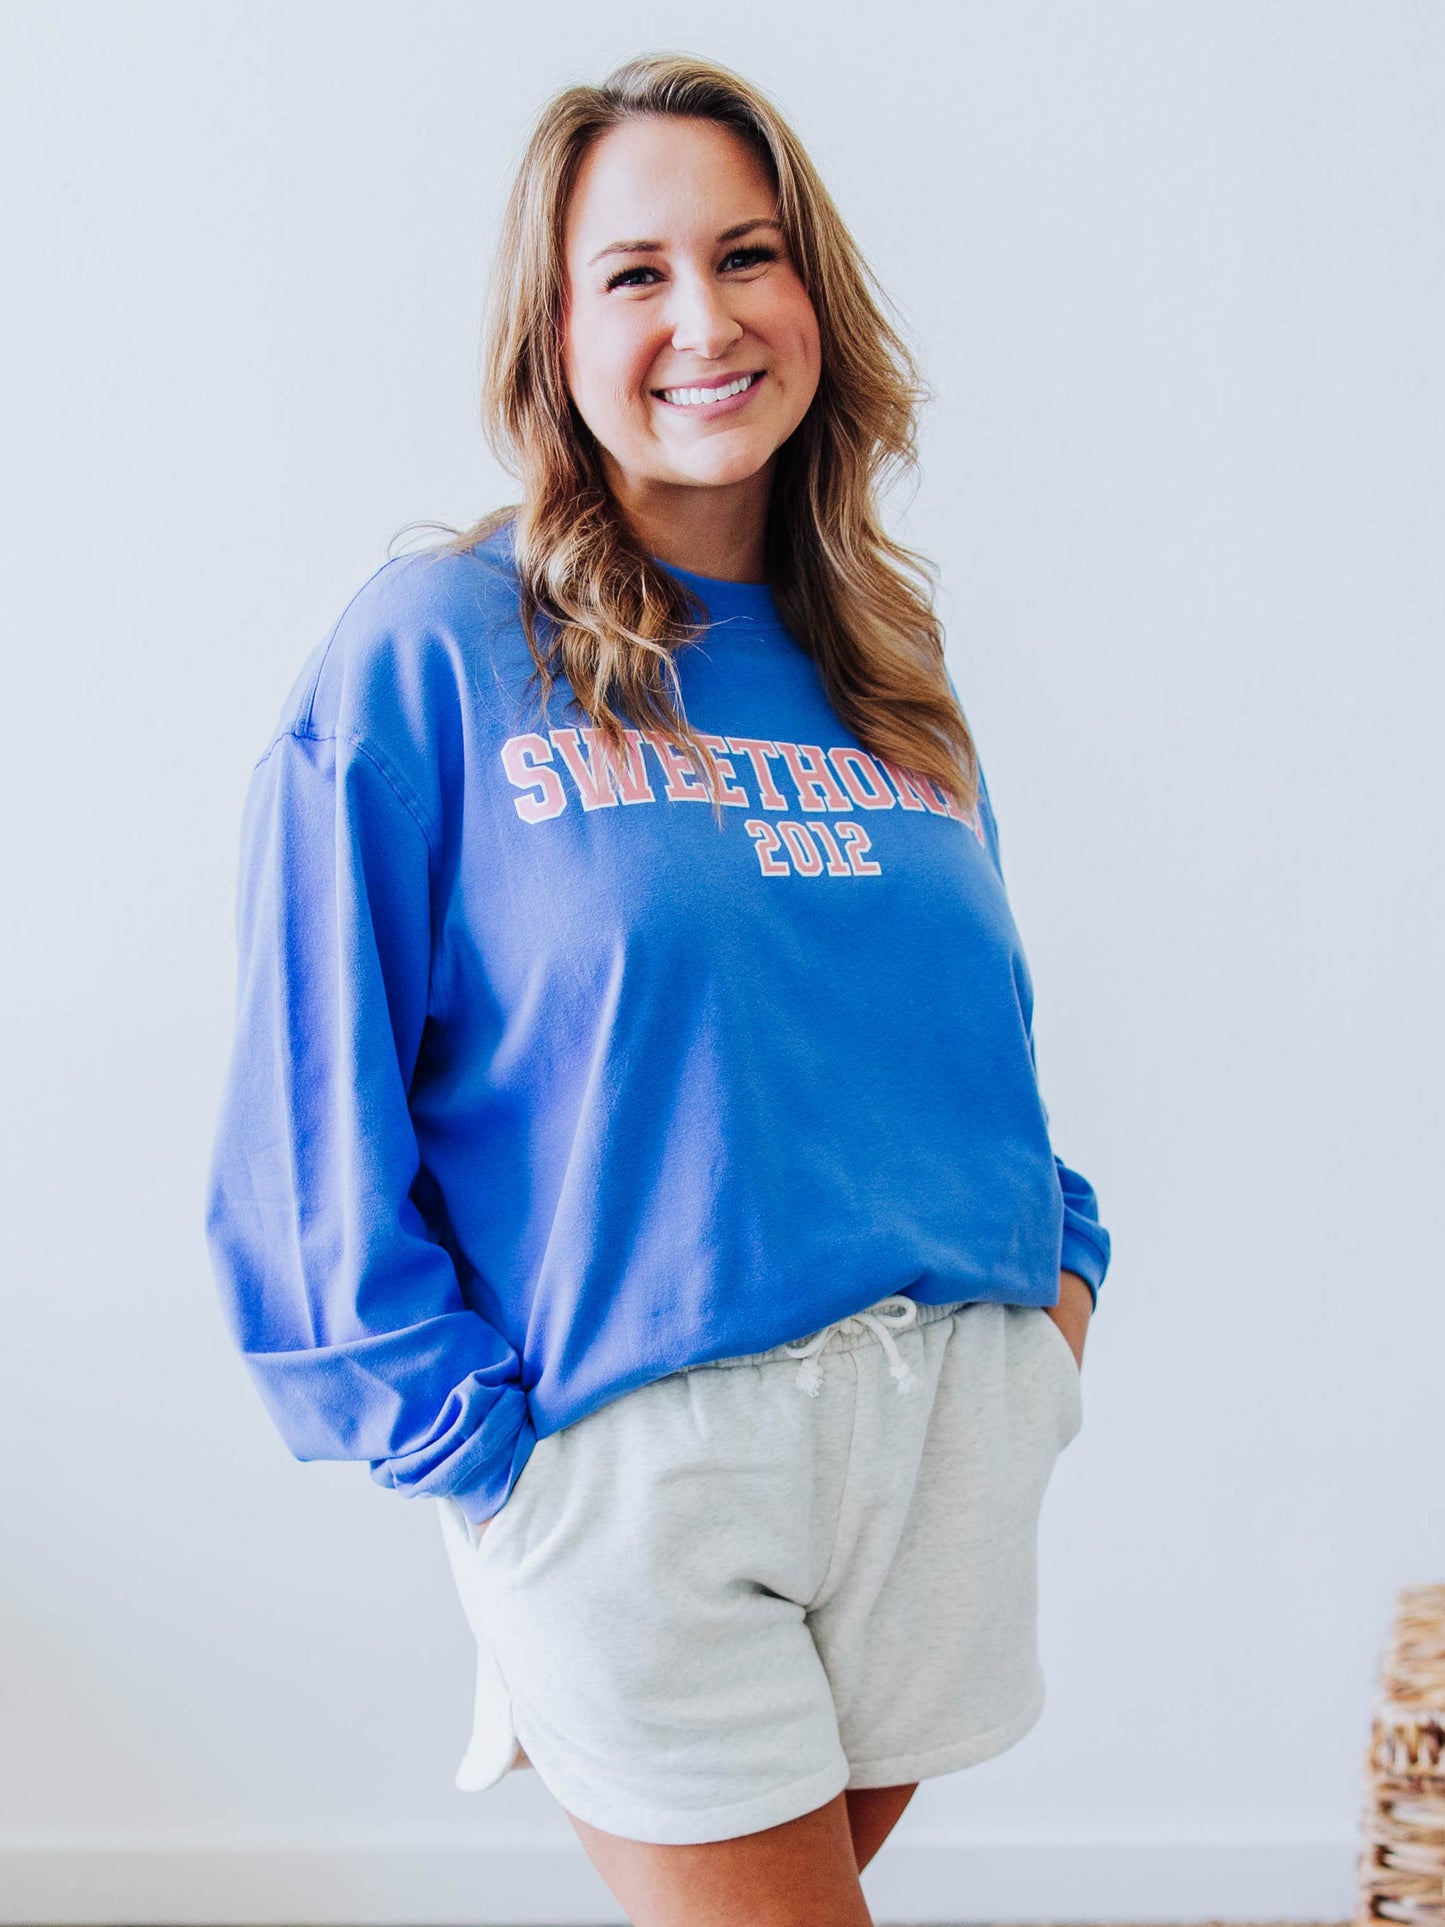 Women's Warm Knit Sweatshirt - SweetHoney Glacial Blue